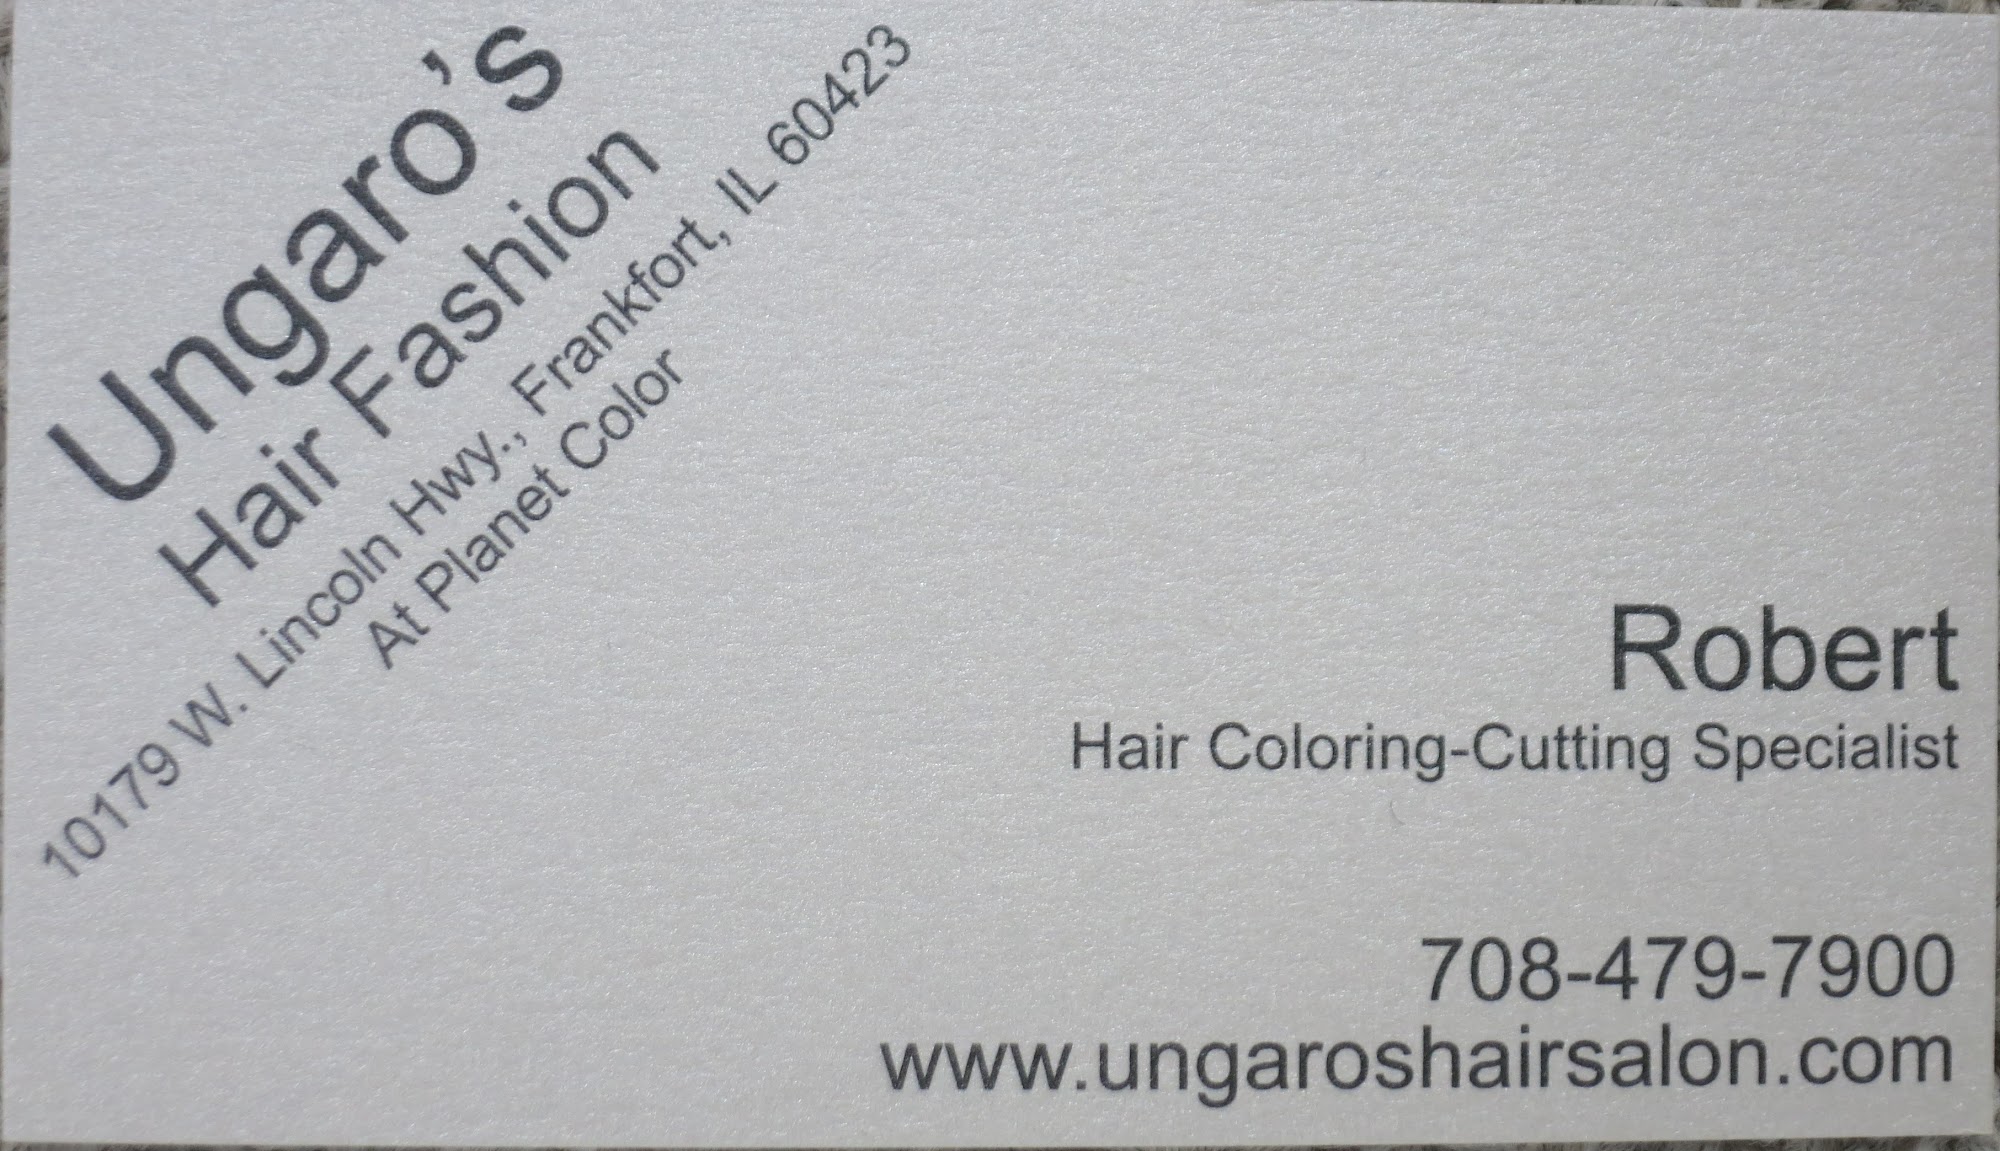 Ungaro's Hair Fashion